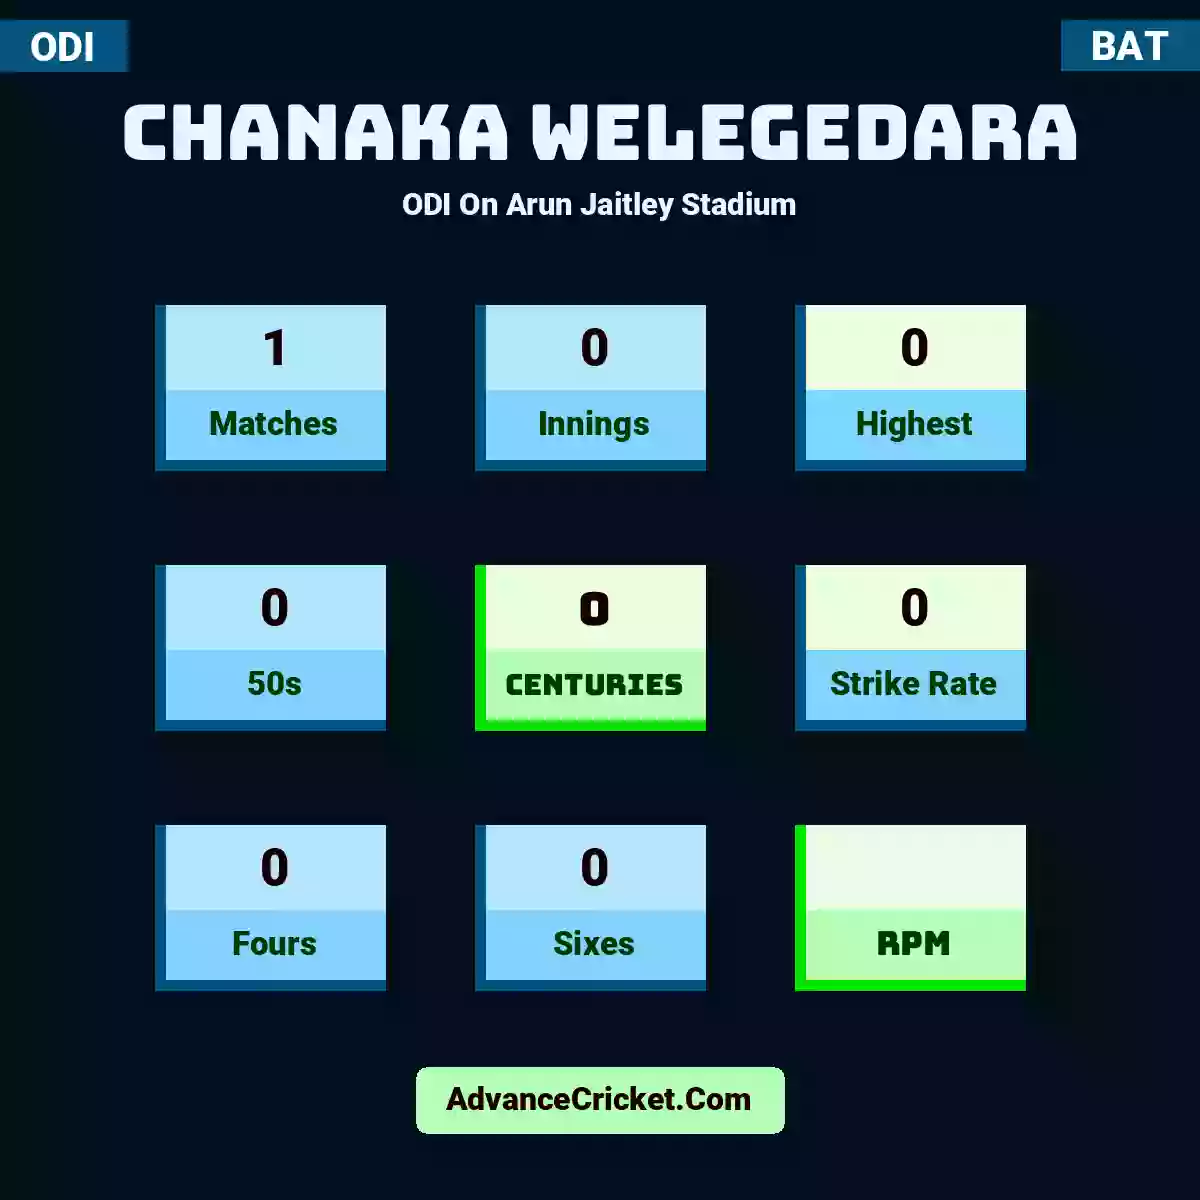 Chanaka Welegedara ODI  On Arun Jaitley Stadium, Chanaka Welegedara played 1 matches, scored 0 runs as highest, 0 half-centuries, and 0 centuries, with a strike rate of 0. C.Welegedara hit 0 fours and 0 sixes.